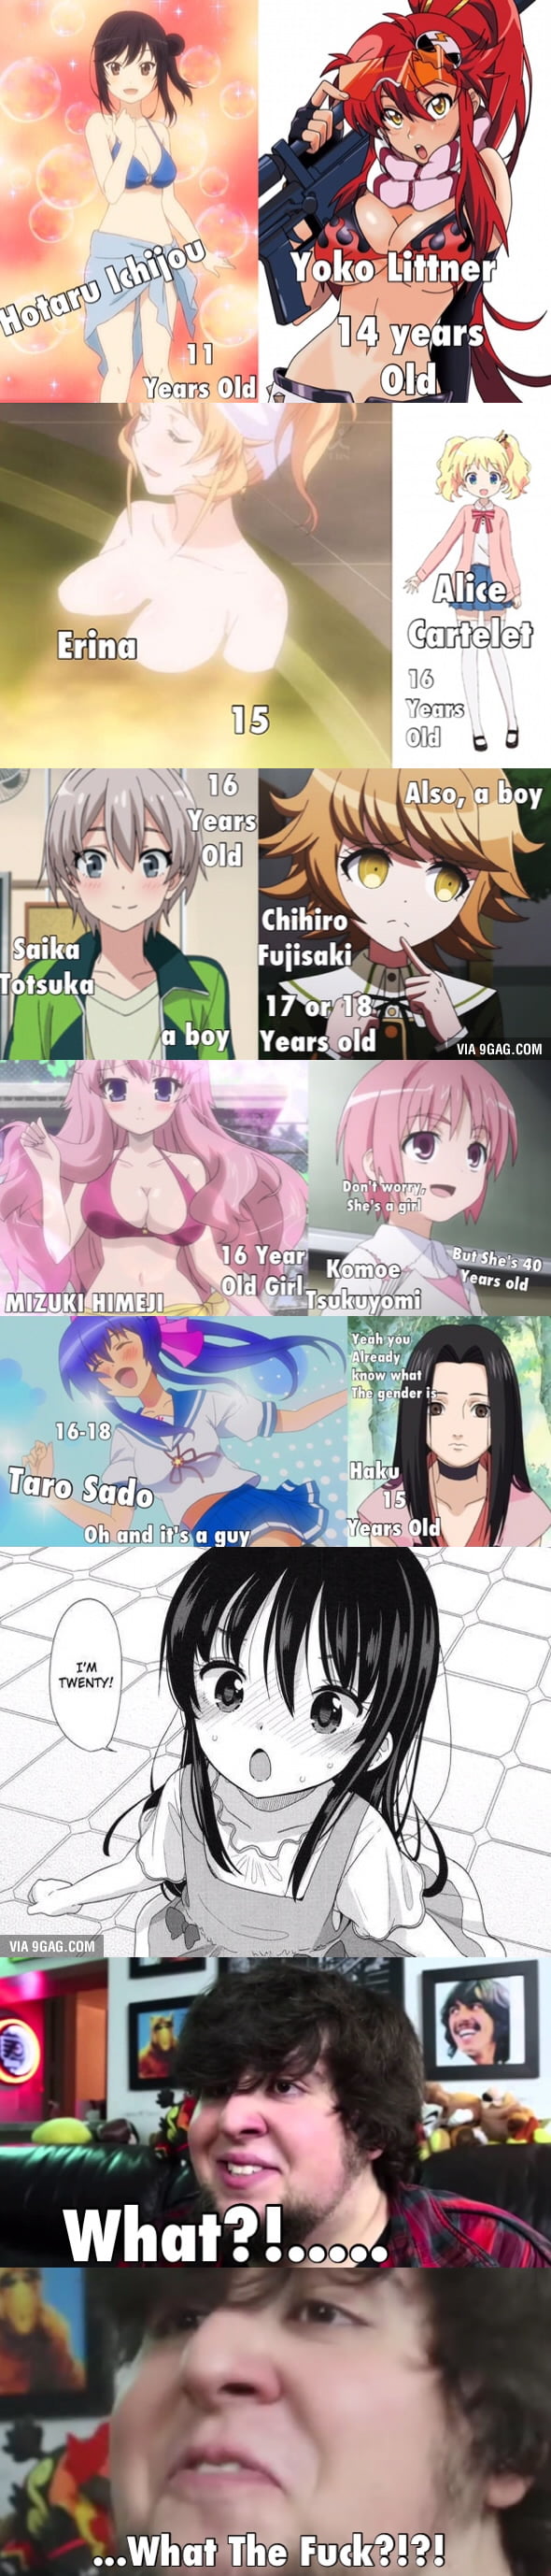 Anime Logic At Its Finestright 9GAG